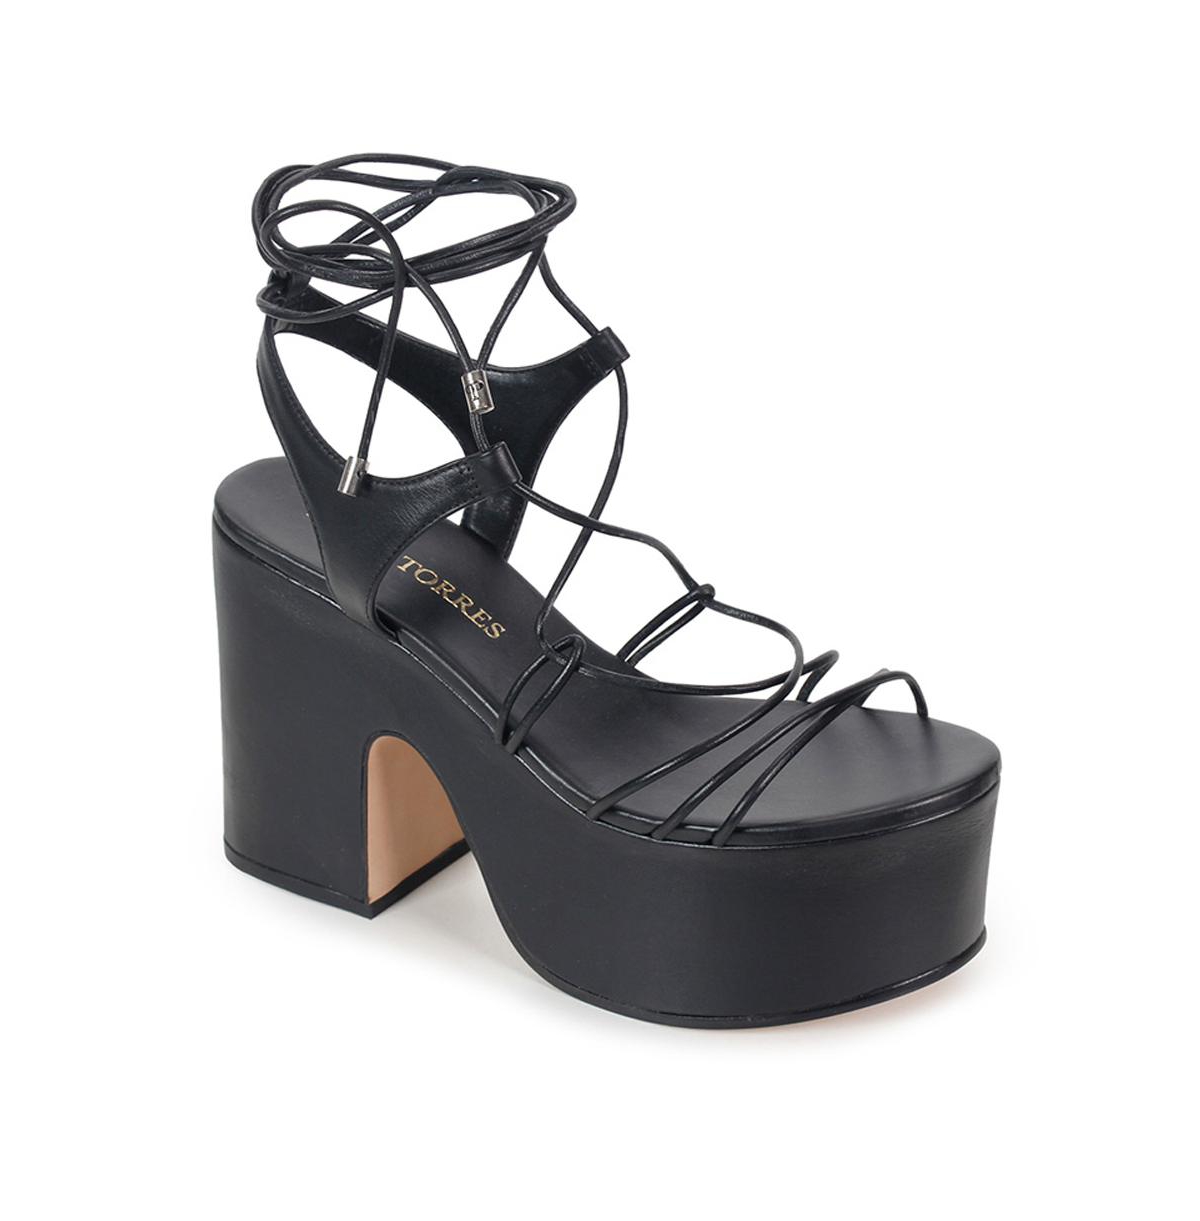 Shoes Women's Greta Strappy Platform Sandals - Graphite